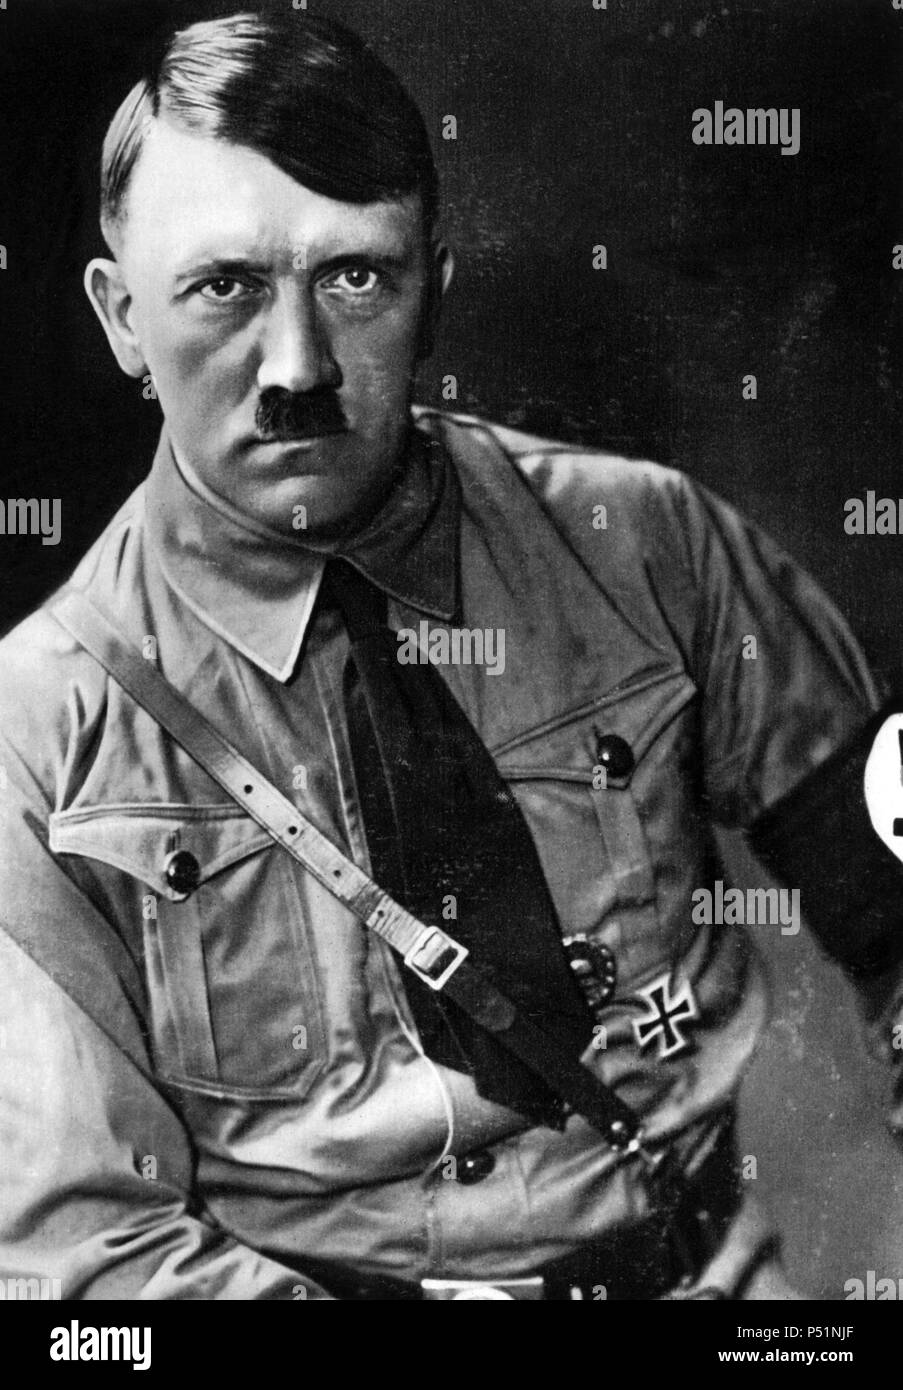 Adolf Hitler, Foto in Uniform, C. 1933. Stockfoto